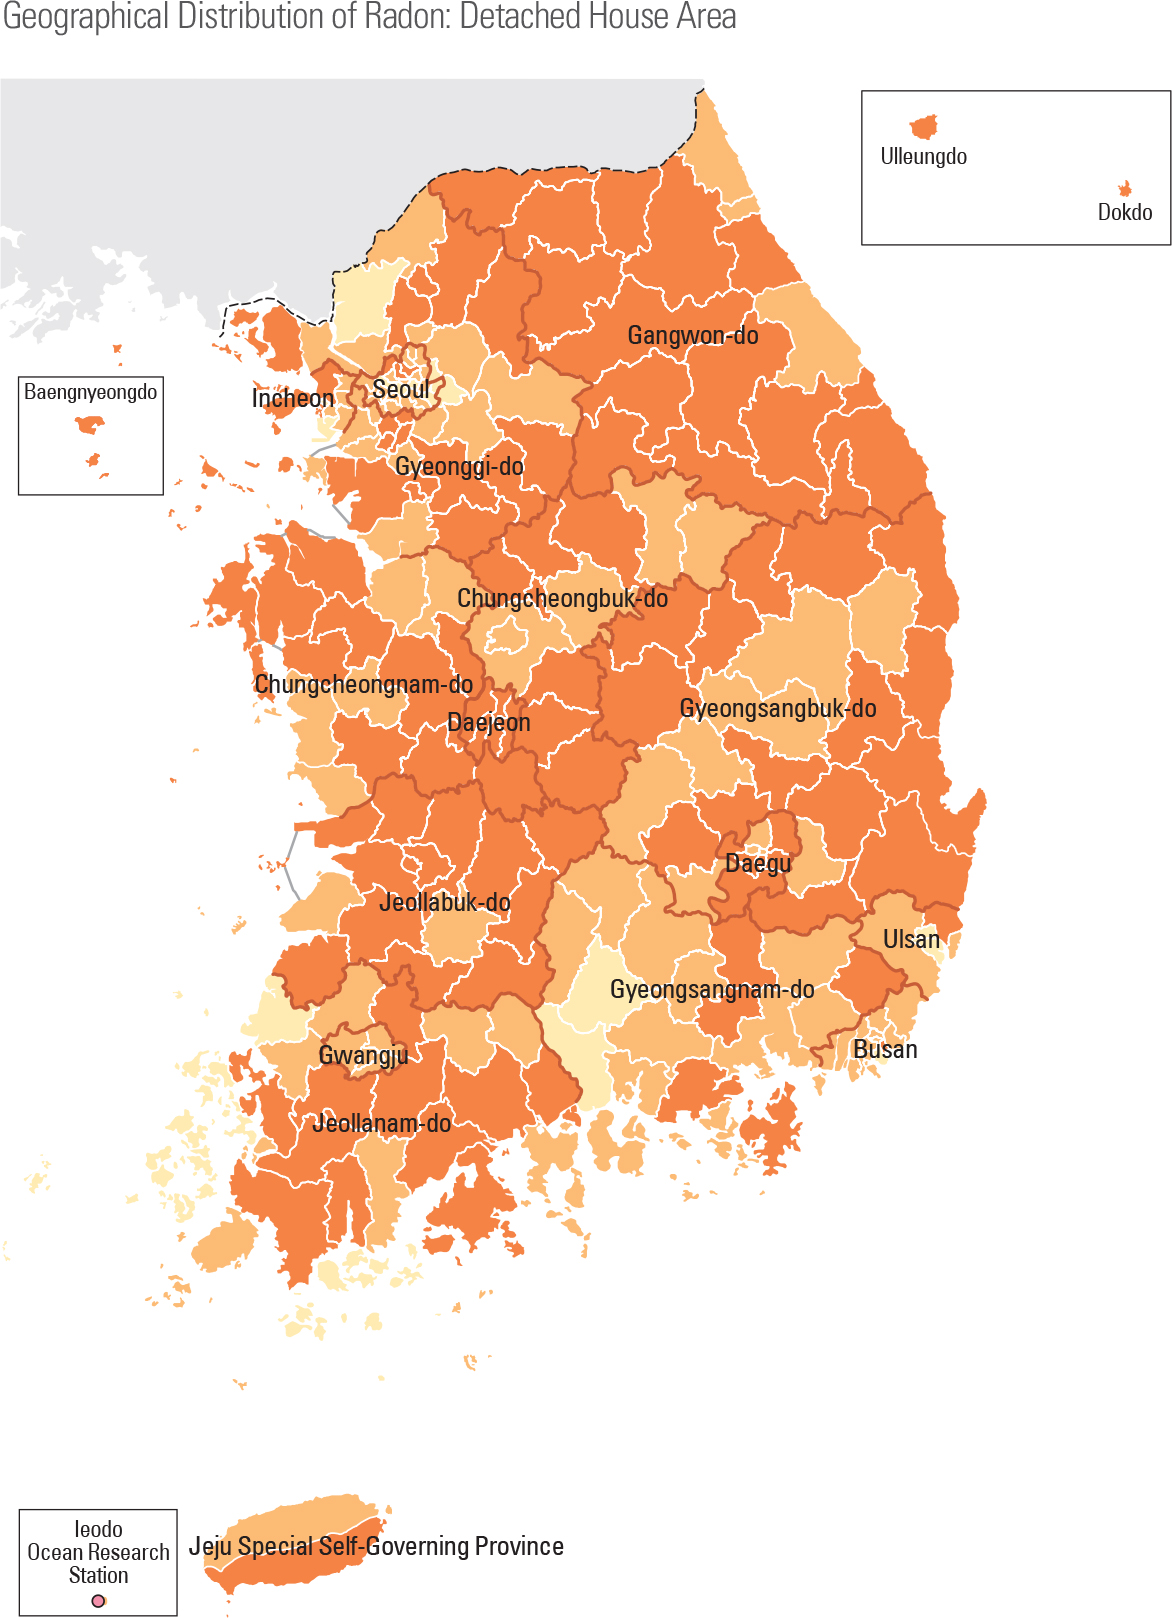 Regional Distribution of Radon